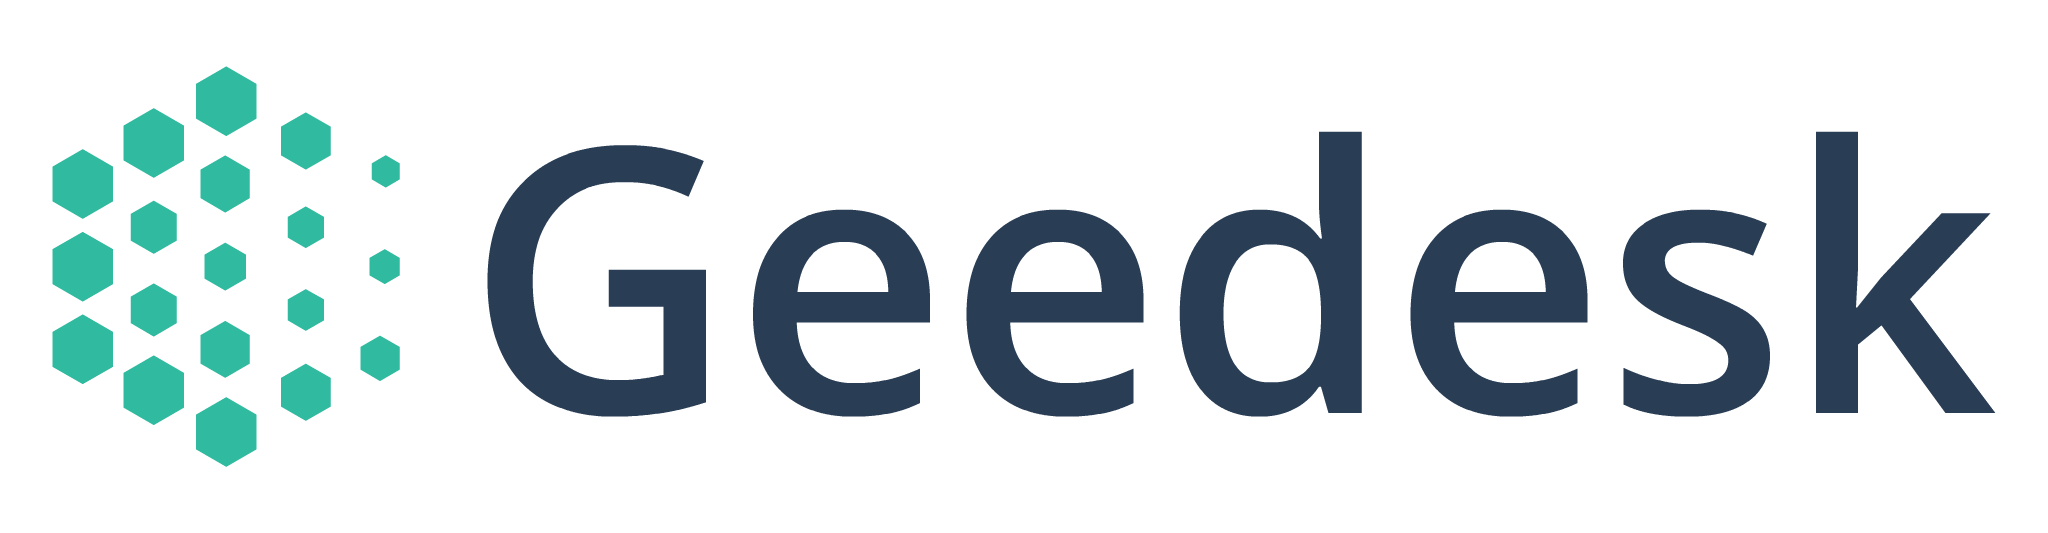 Desk.com Logo - Geedesk - The first defence against negative reviews - Intelligent ...